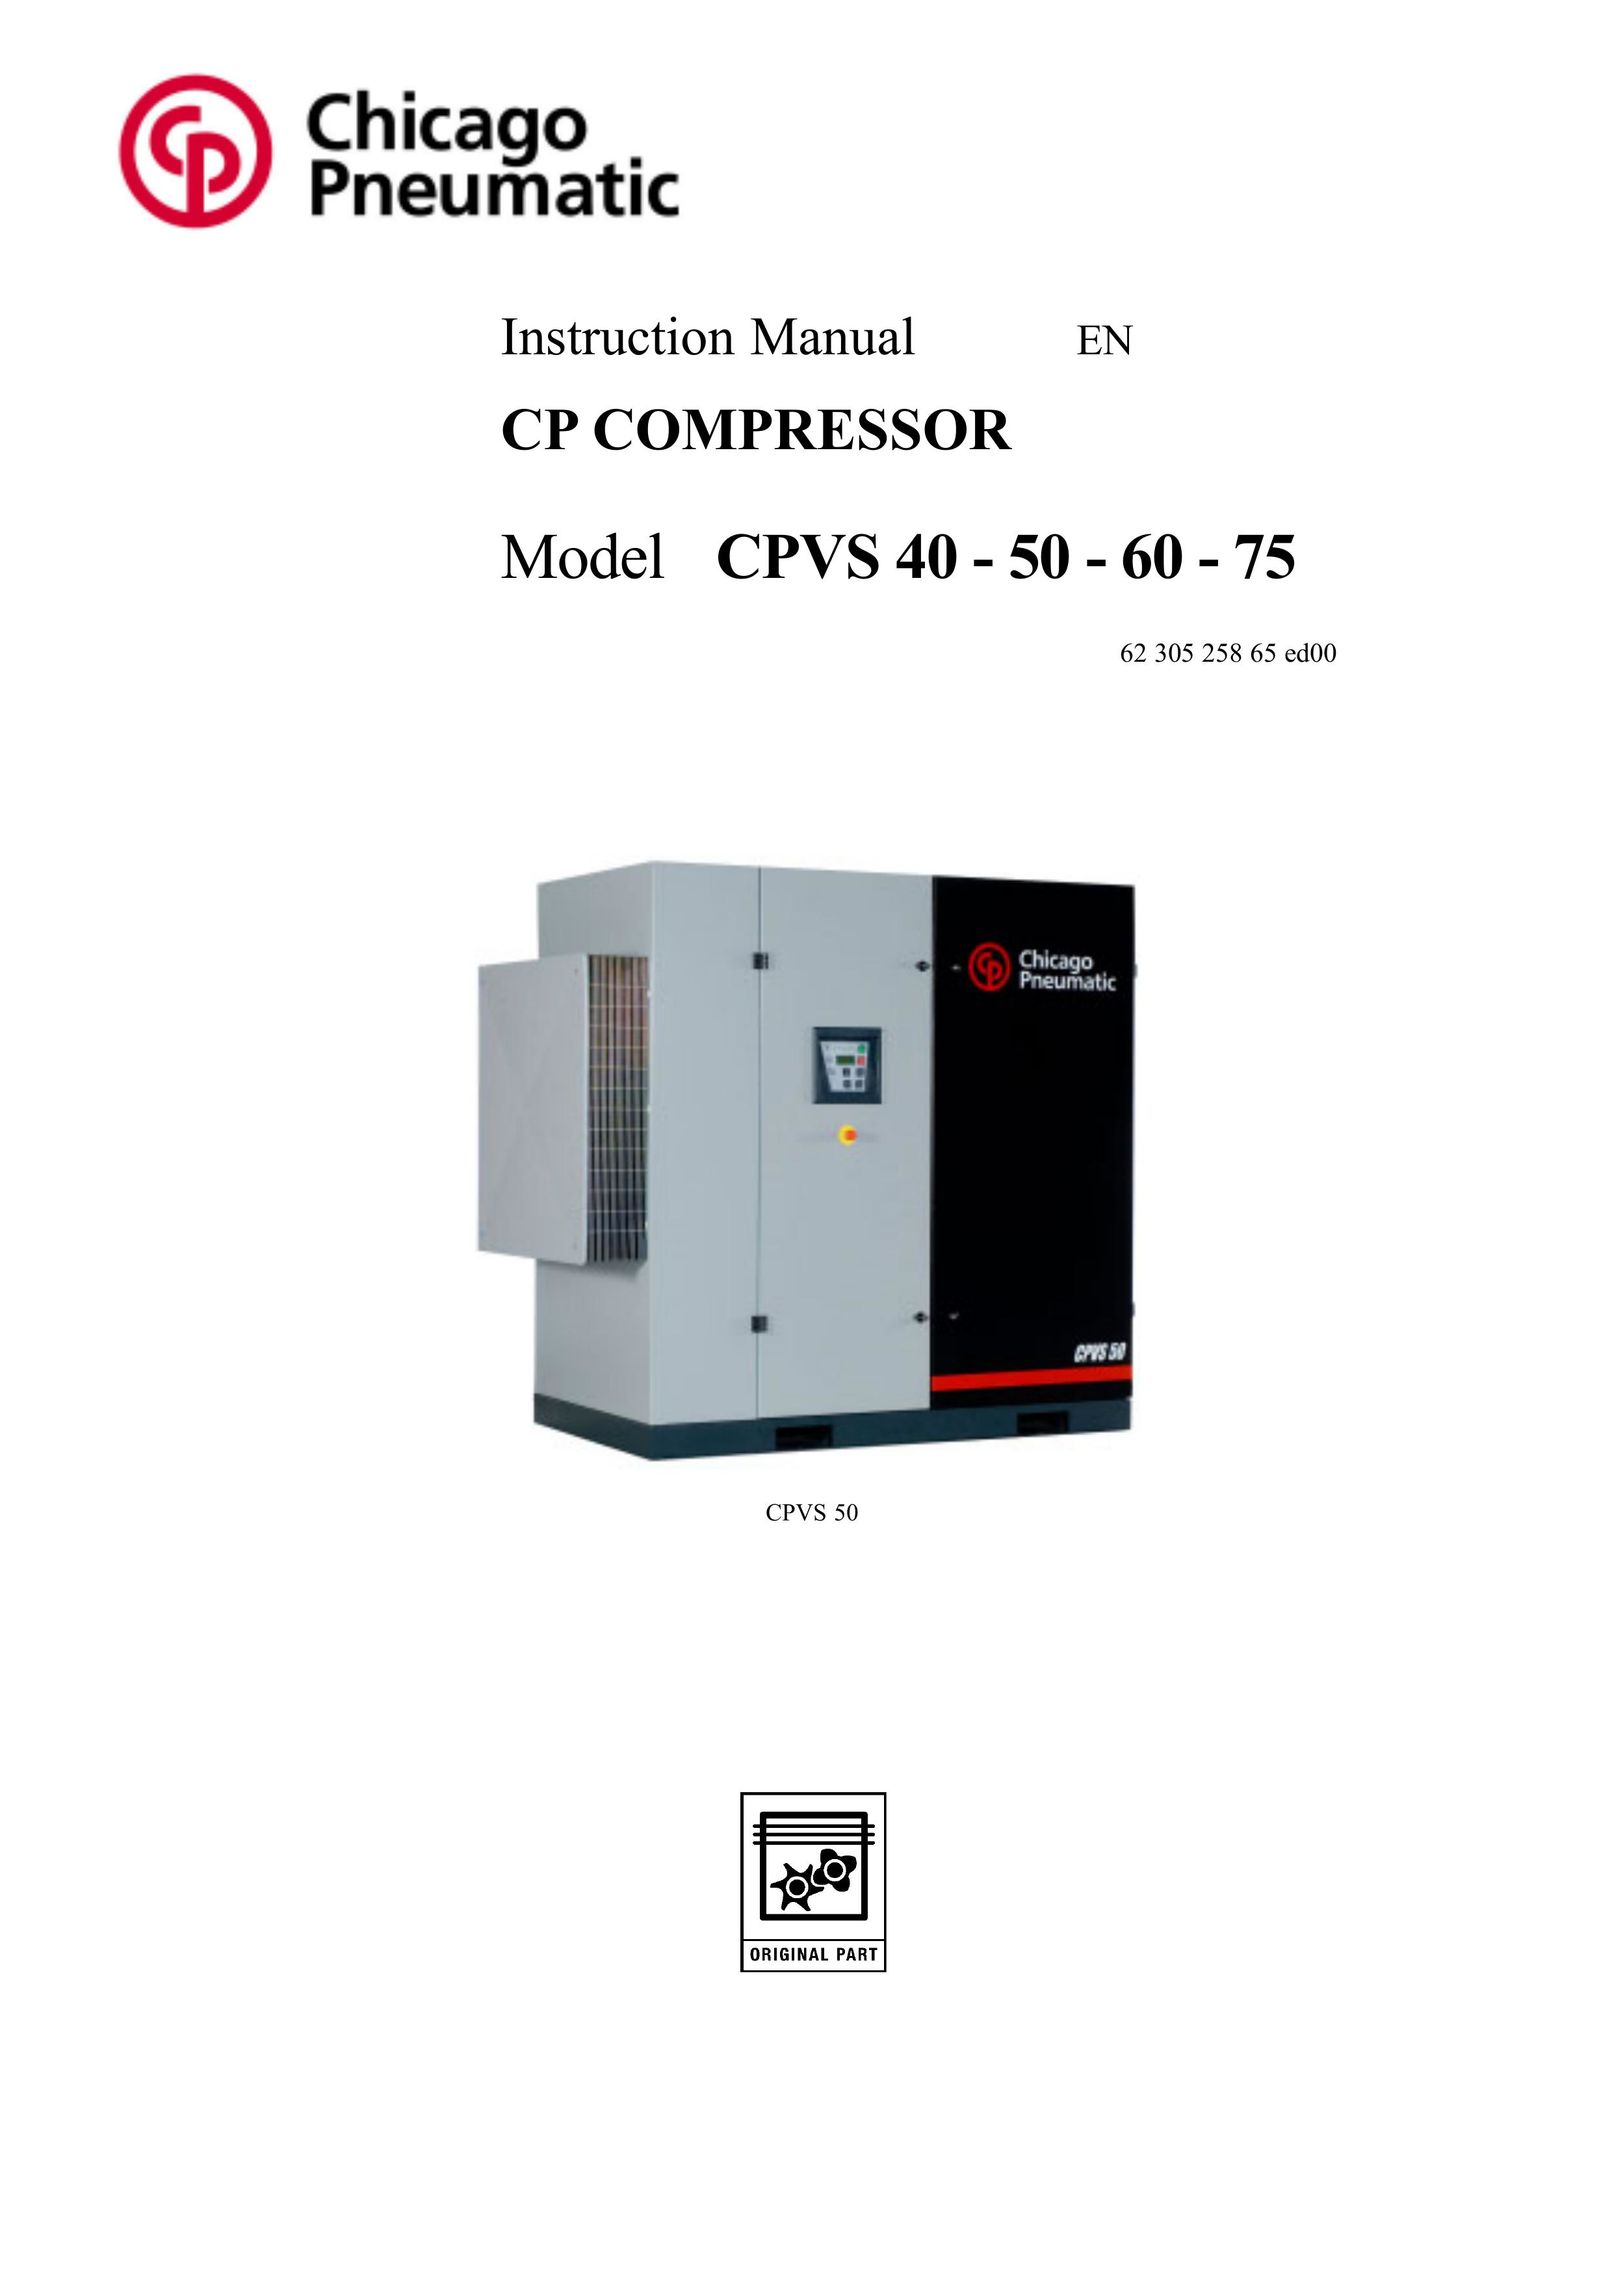 Chicago Pneumatic CPVS 50 Air Compressor User Manual